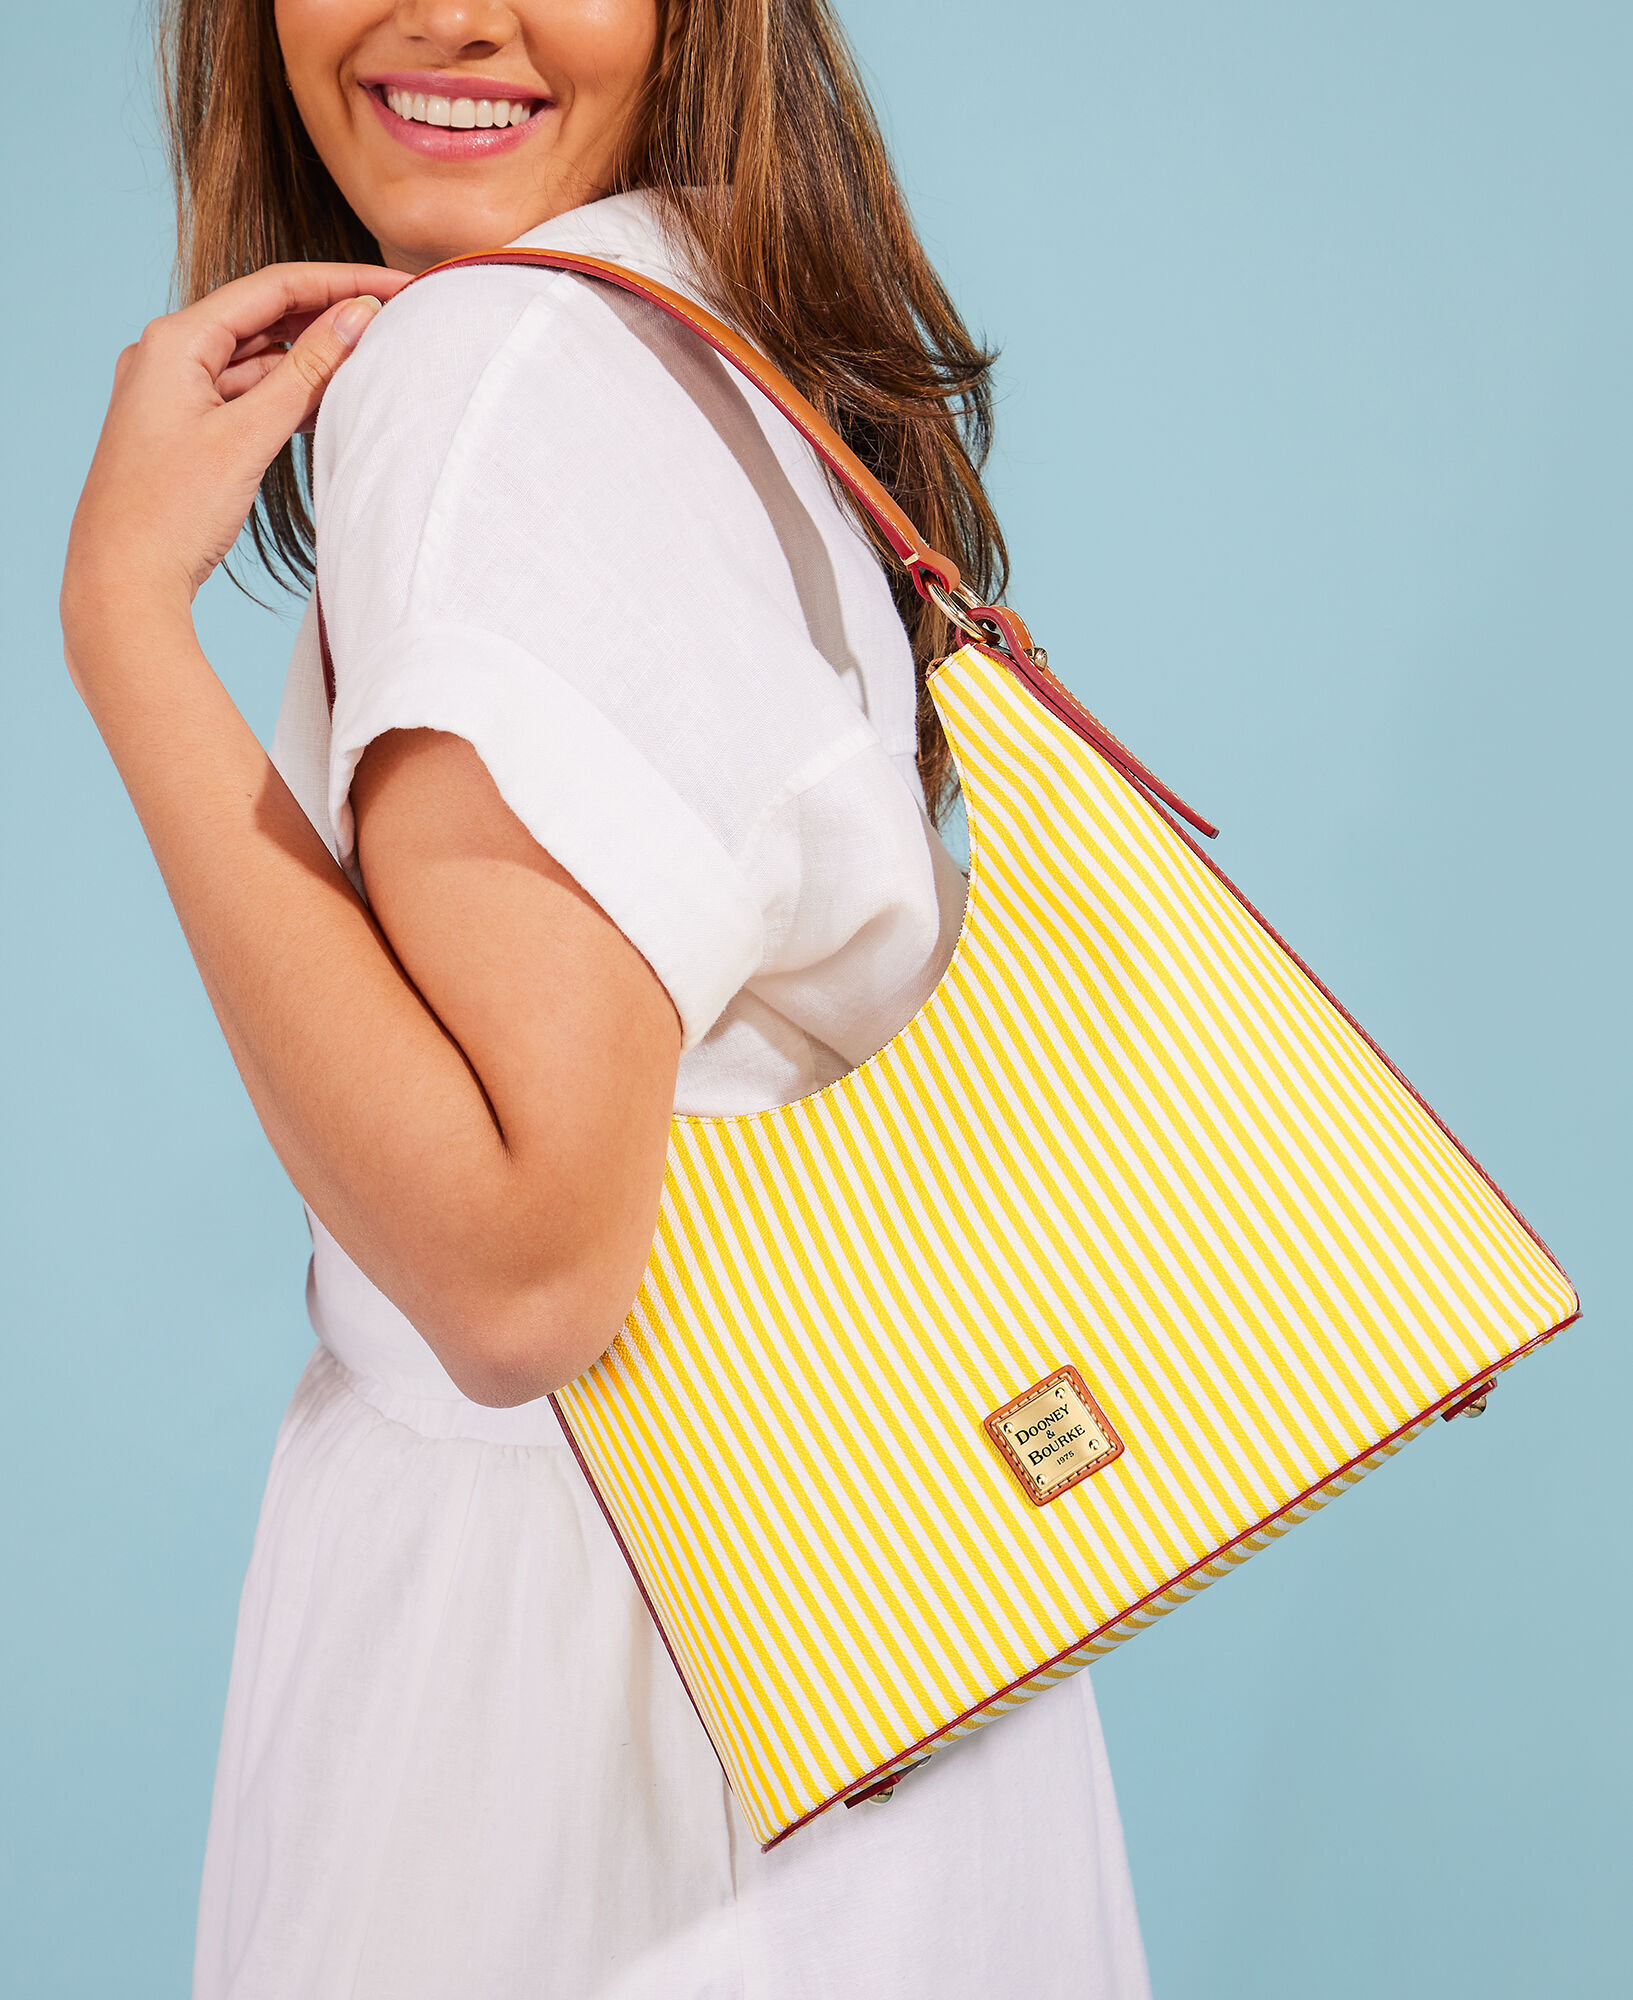 Dooney & Bourke Summer Handbag/shoulderbag Yellow Fabric and 